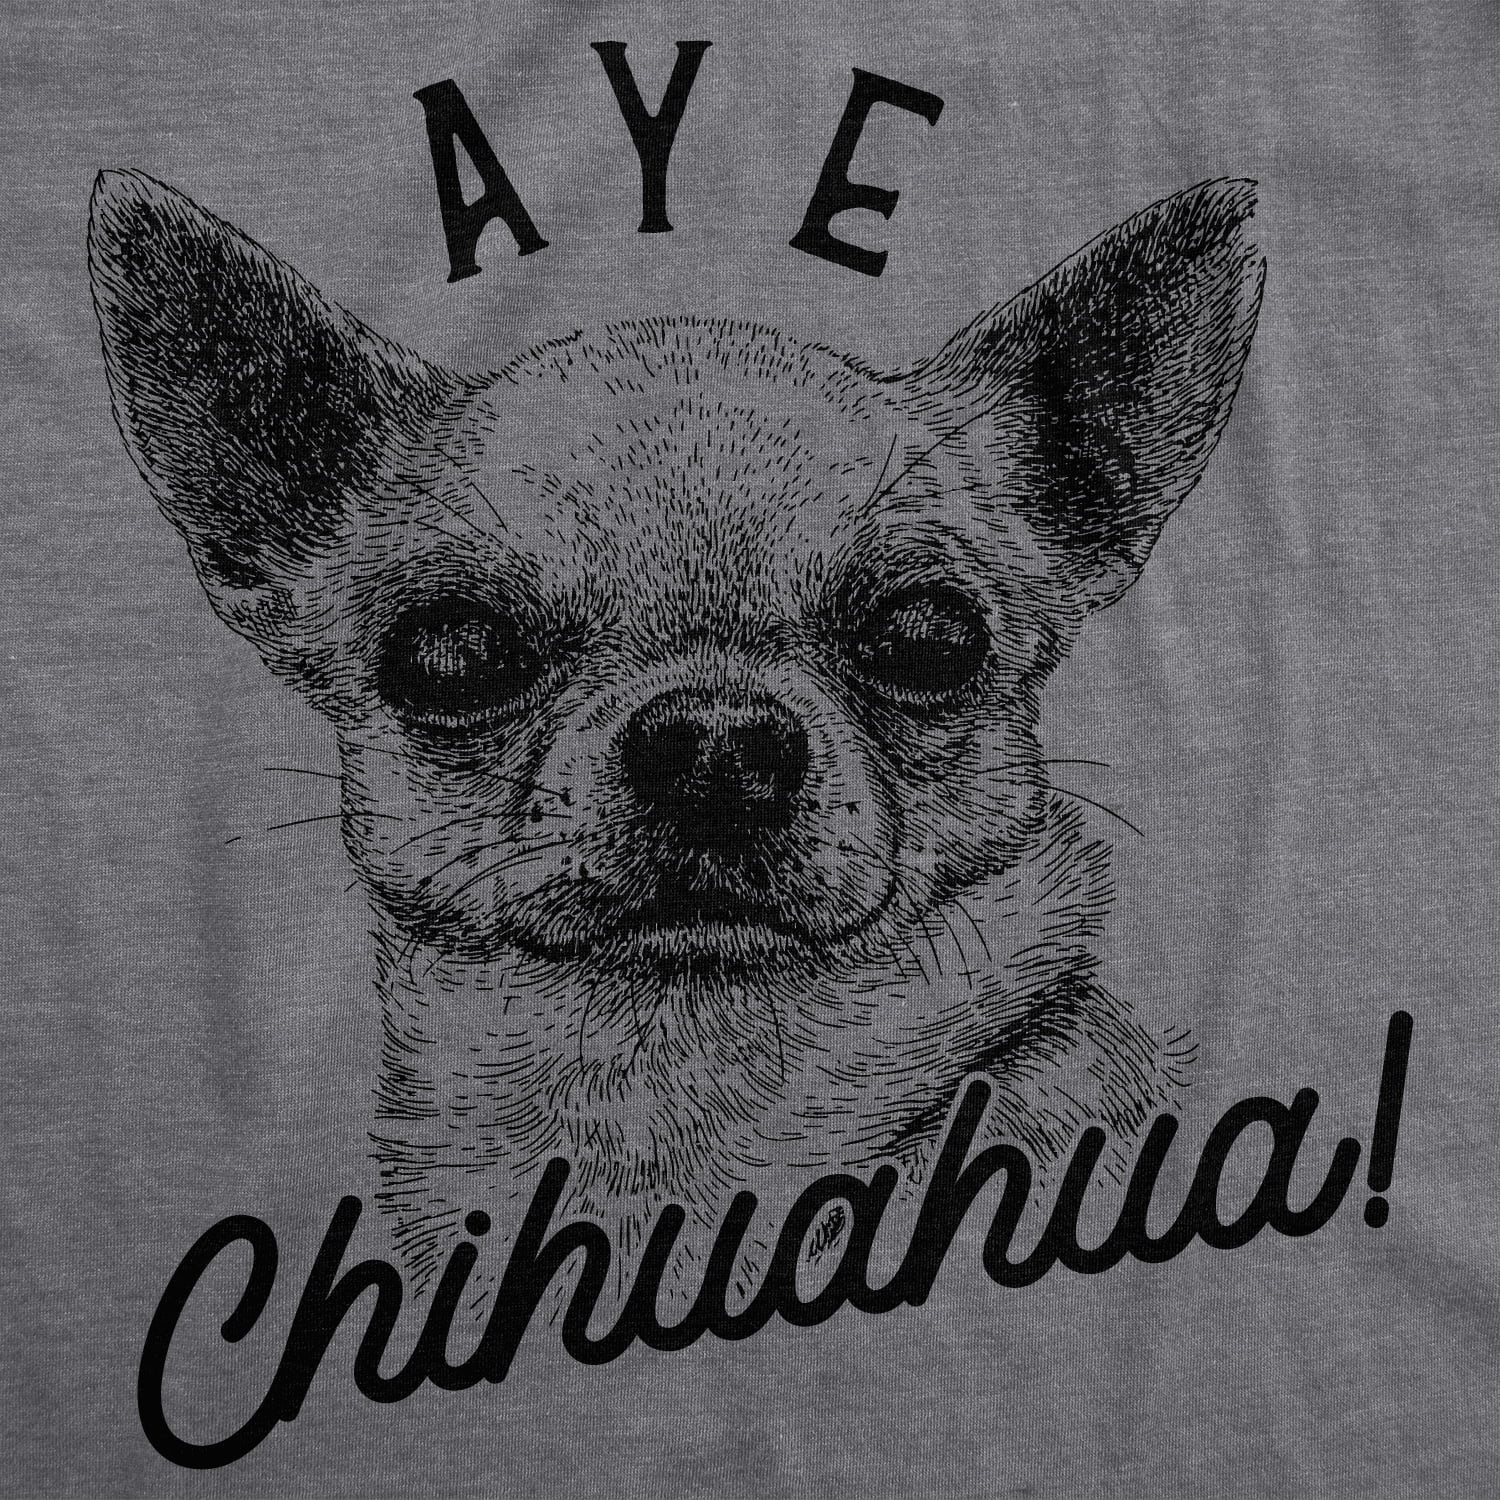 ShopWavez Chihuahua Shirt Coffee and Chihuahuas Dog Shirt for Chihuahua Lover Chihuahua Gift Chihuahua Owner Chihuahua T-Shirt Dog Lover